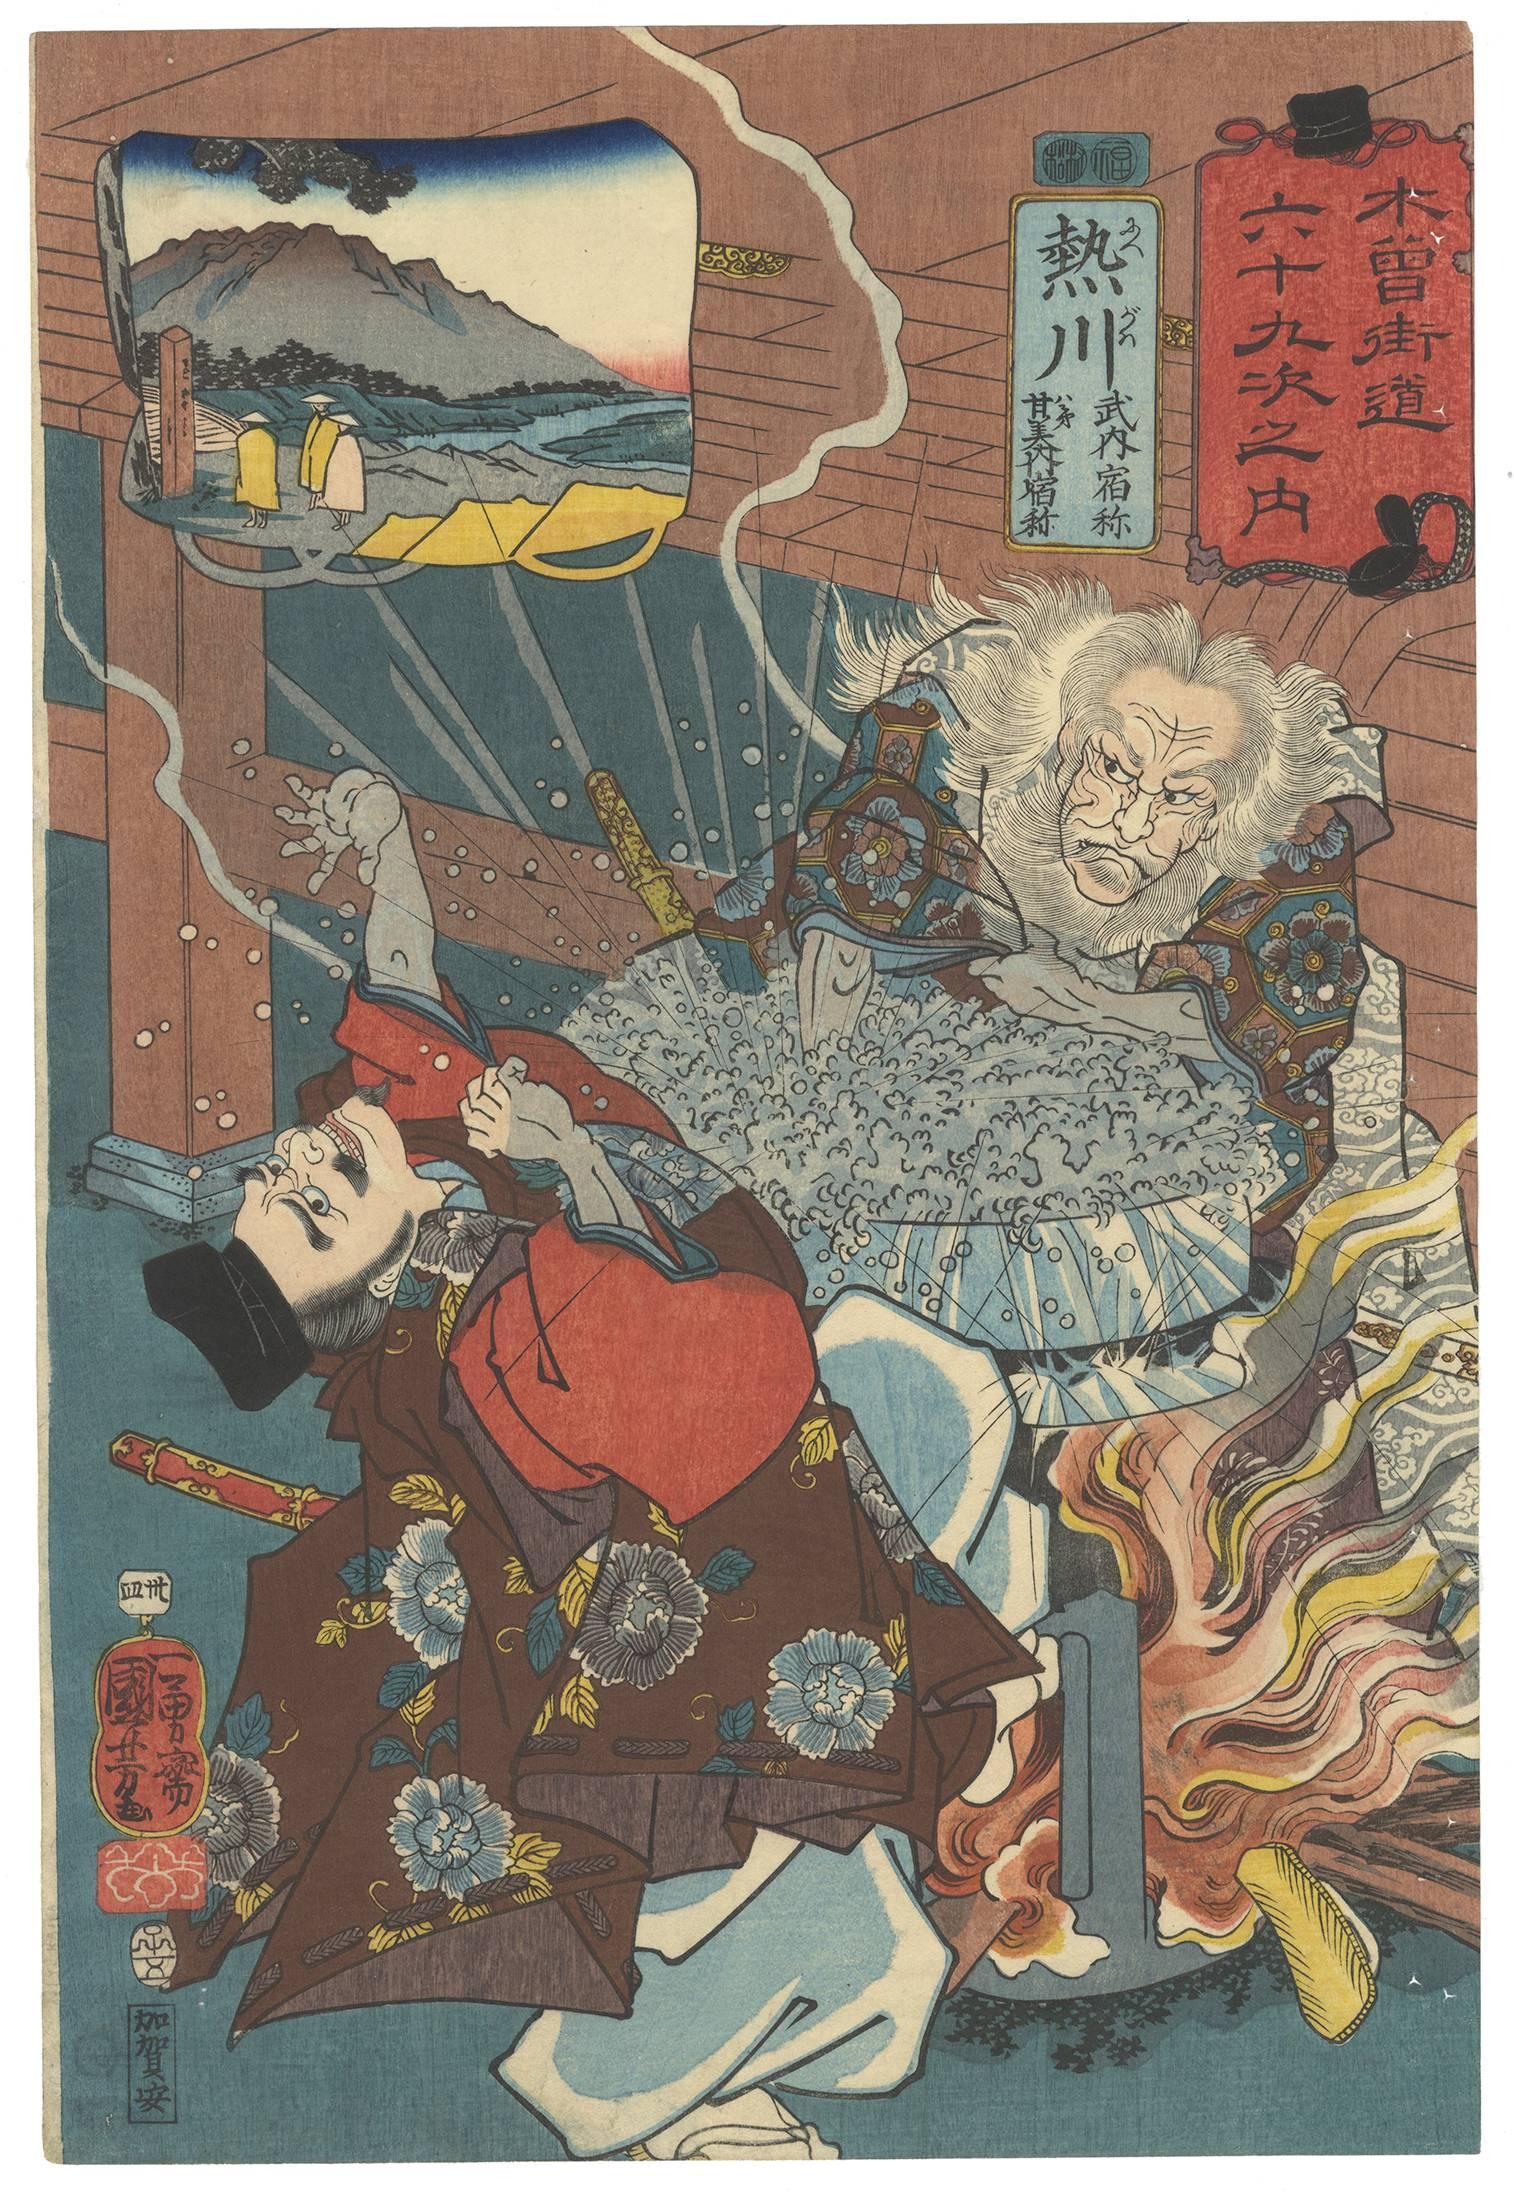 Utagawa Kuniyoshi Portrait Print - Kuniyoshi, Original Japanese Woodblock Print, Kisokaido, Fire, Floating World